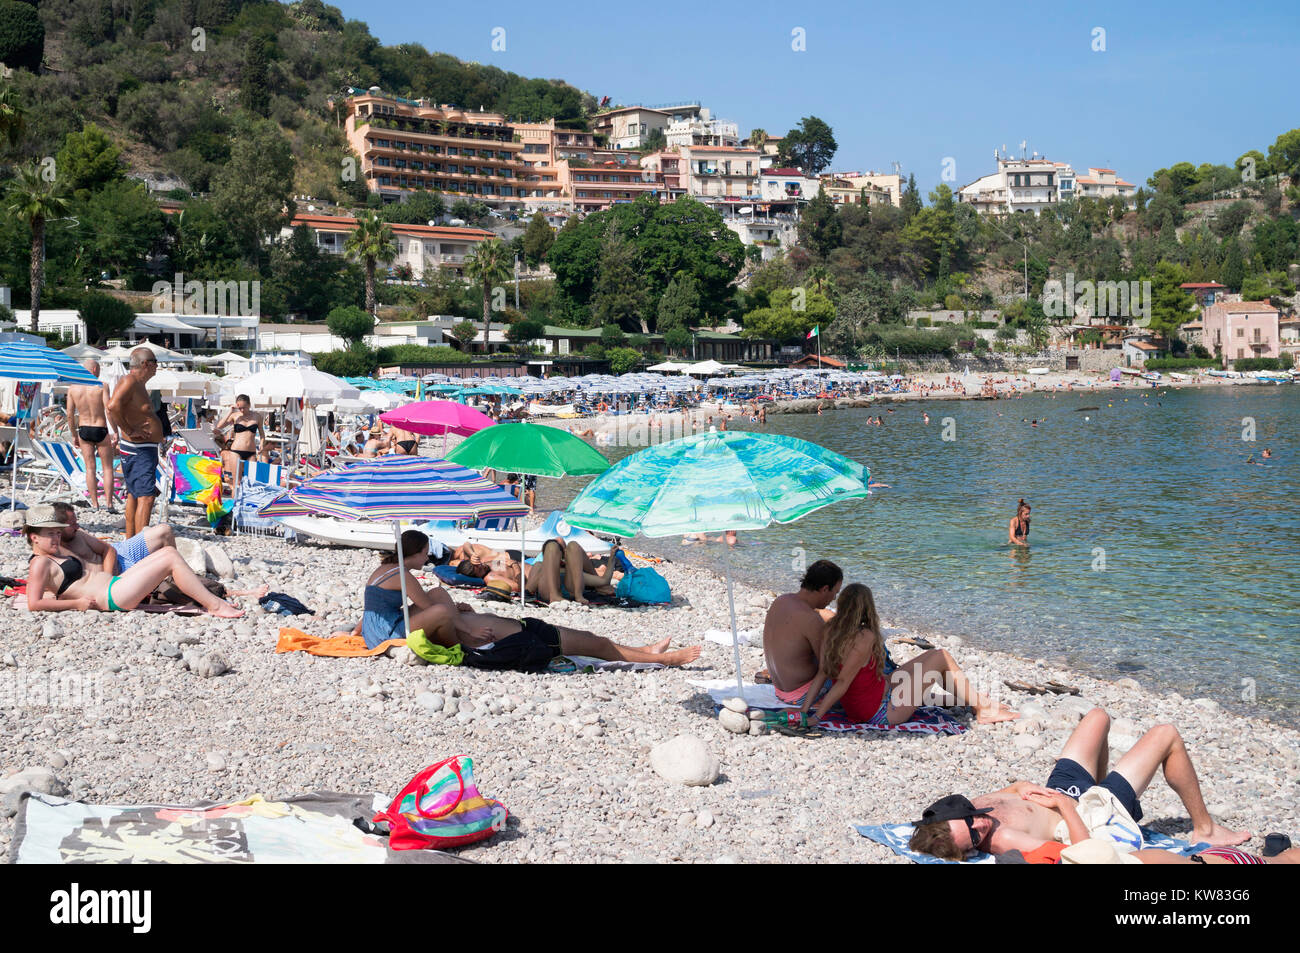 People sunbathing on the beach at Mazzarò, Taormina, Sicily Stock Photo